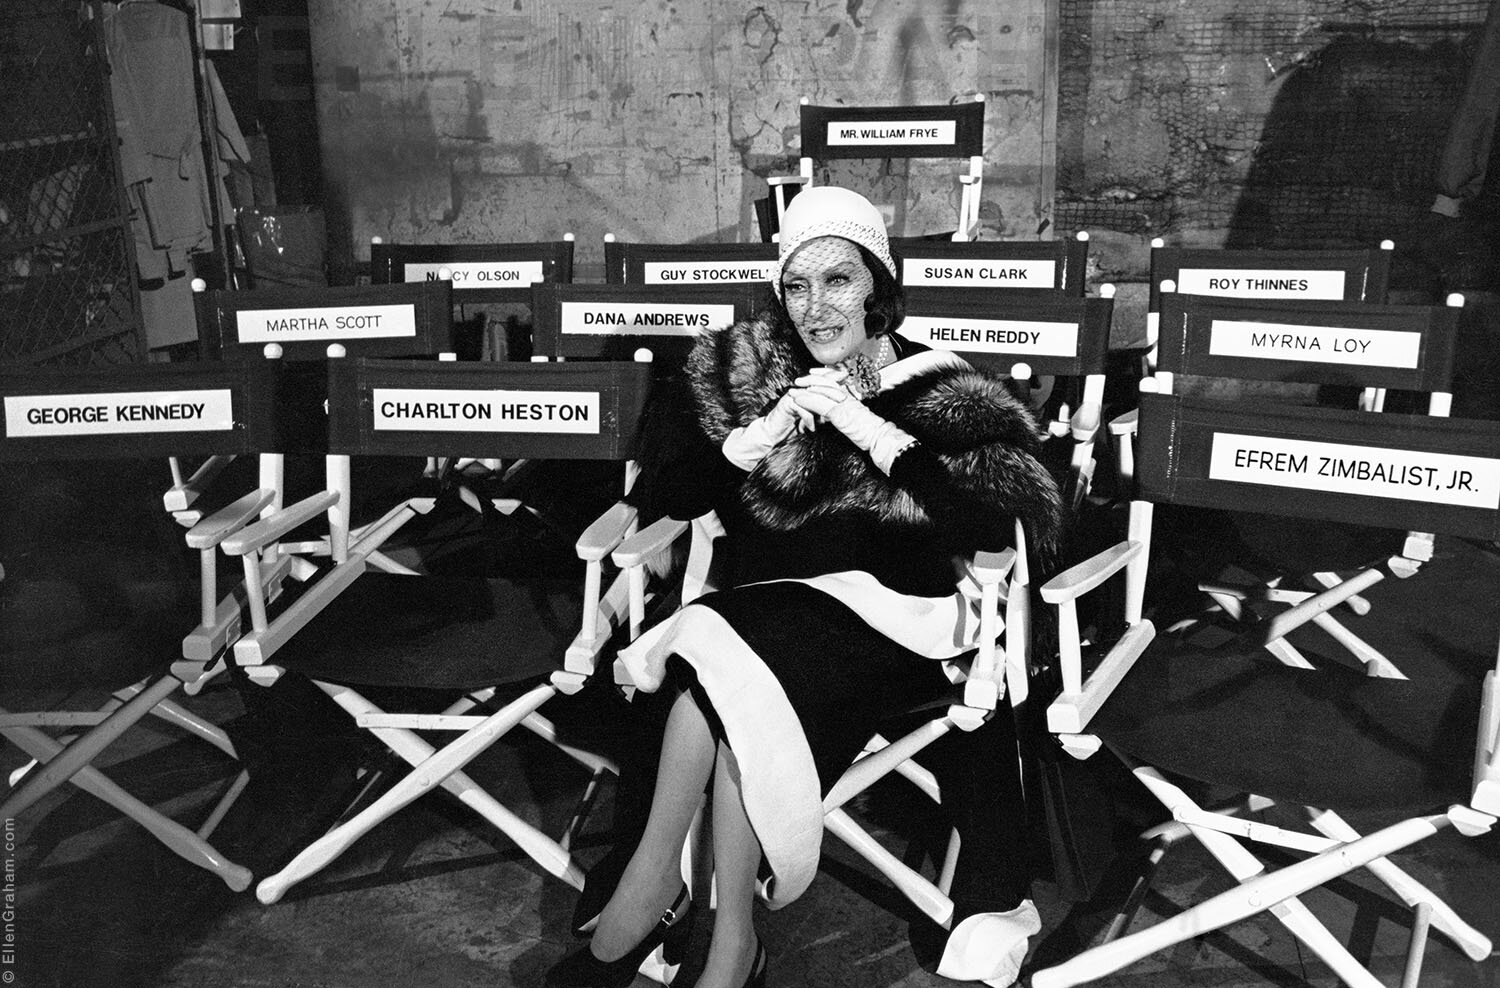 Gloria Swanson, "Airport 1975" Film Set, Universal Studios, Hollywood, CA, 1974